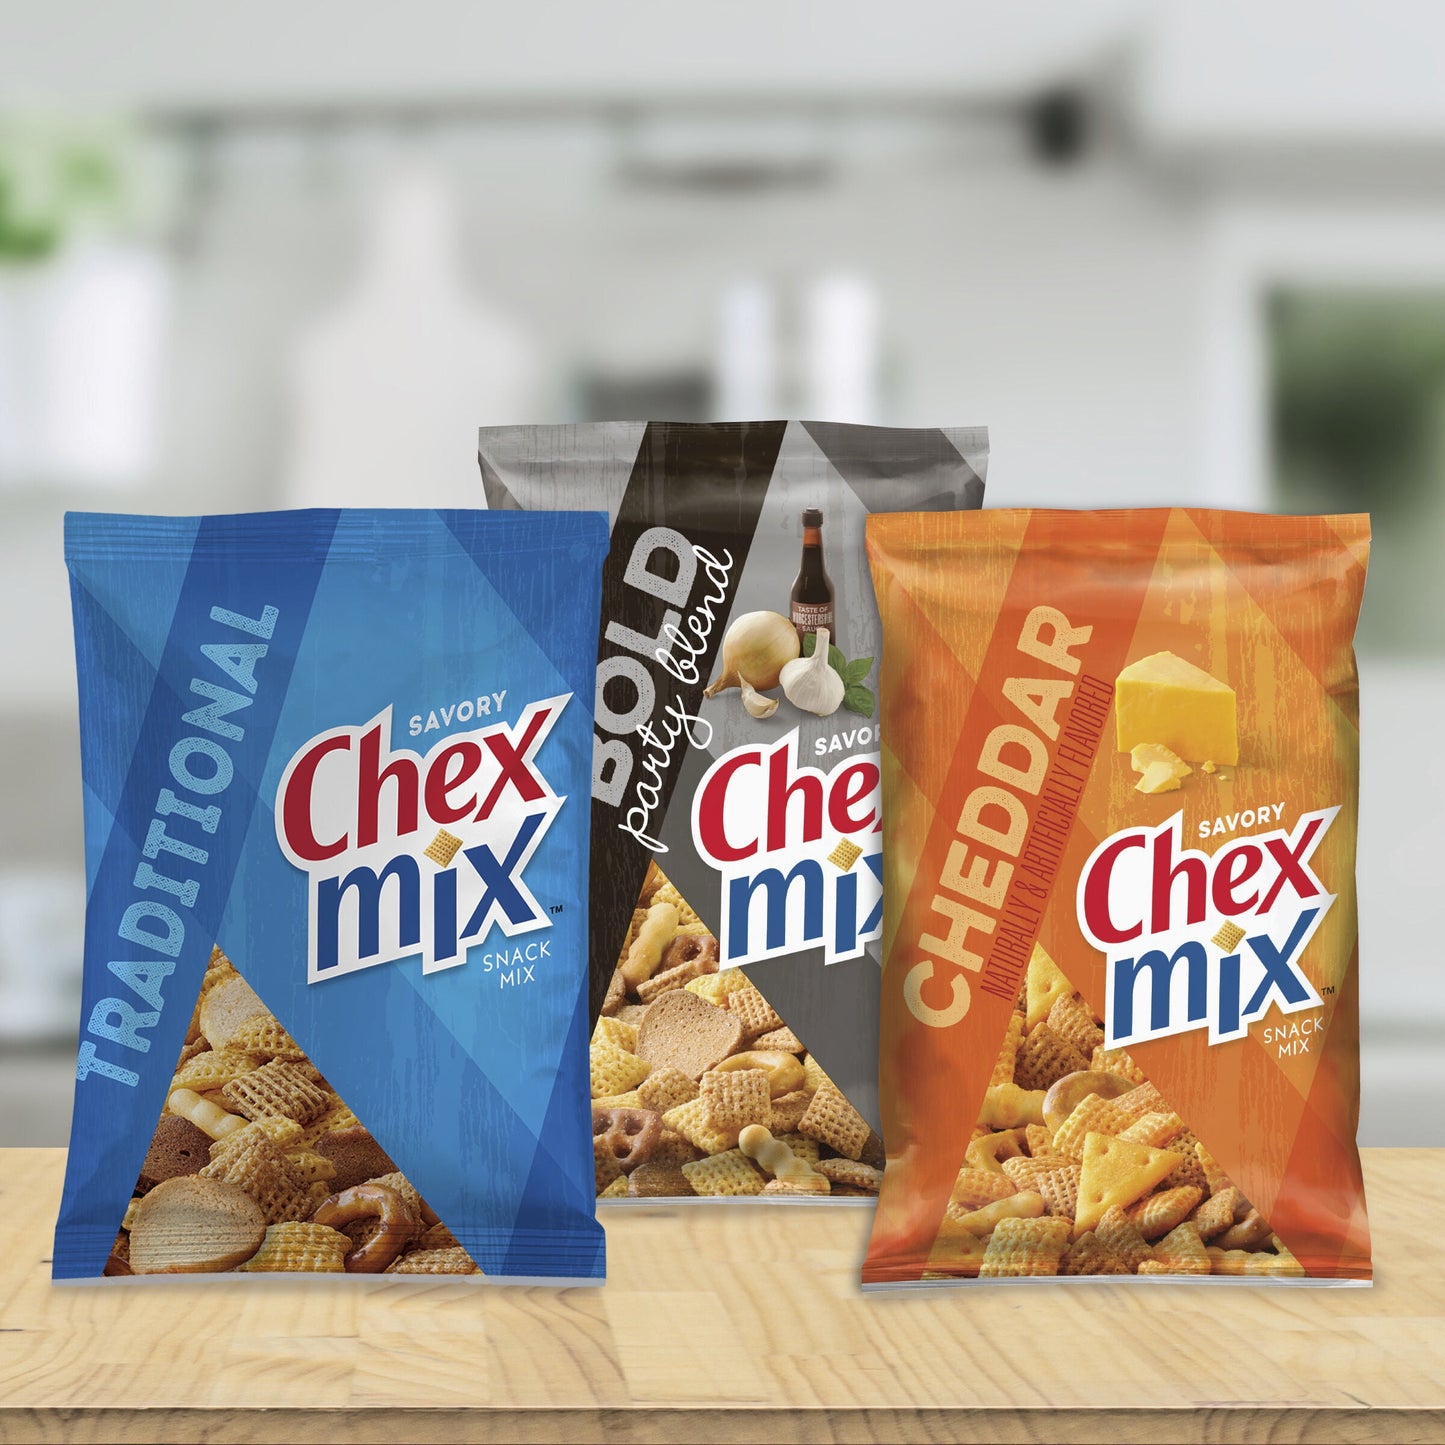 Chex Mix Snack Mix, Turtle, Indulgent Snack Bag, 8 Oz